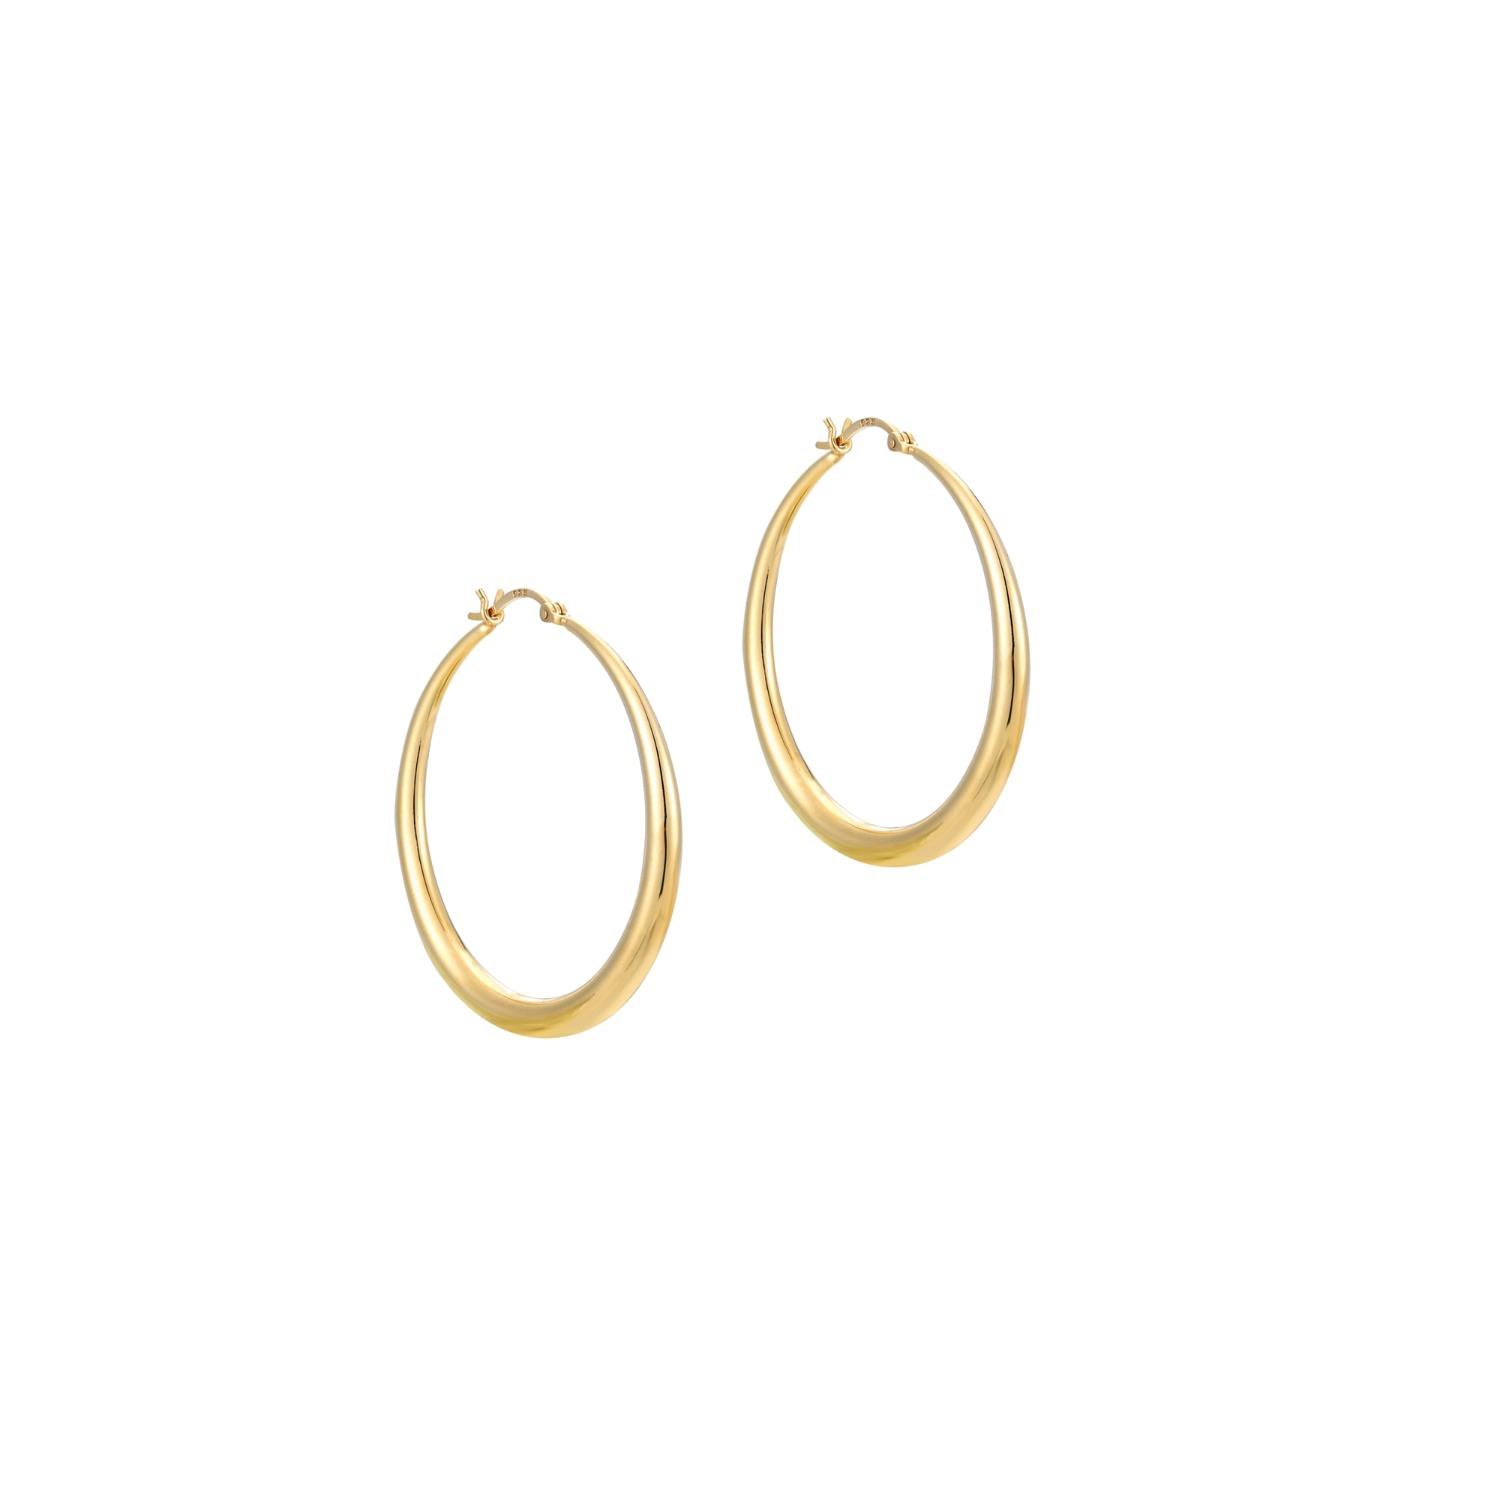 Seol + Gold 18kt gold vermeil 18mm thick Creole hoop earrings